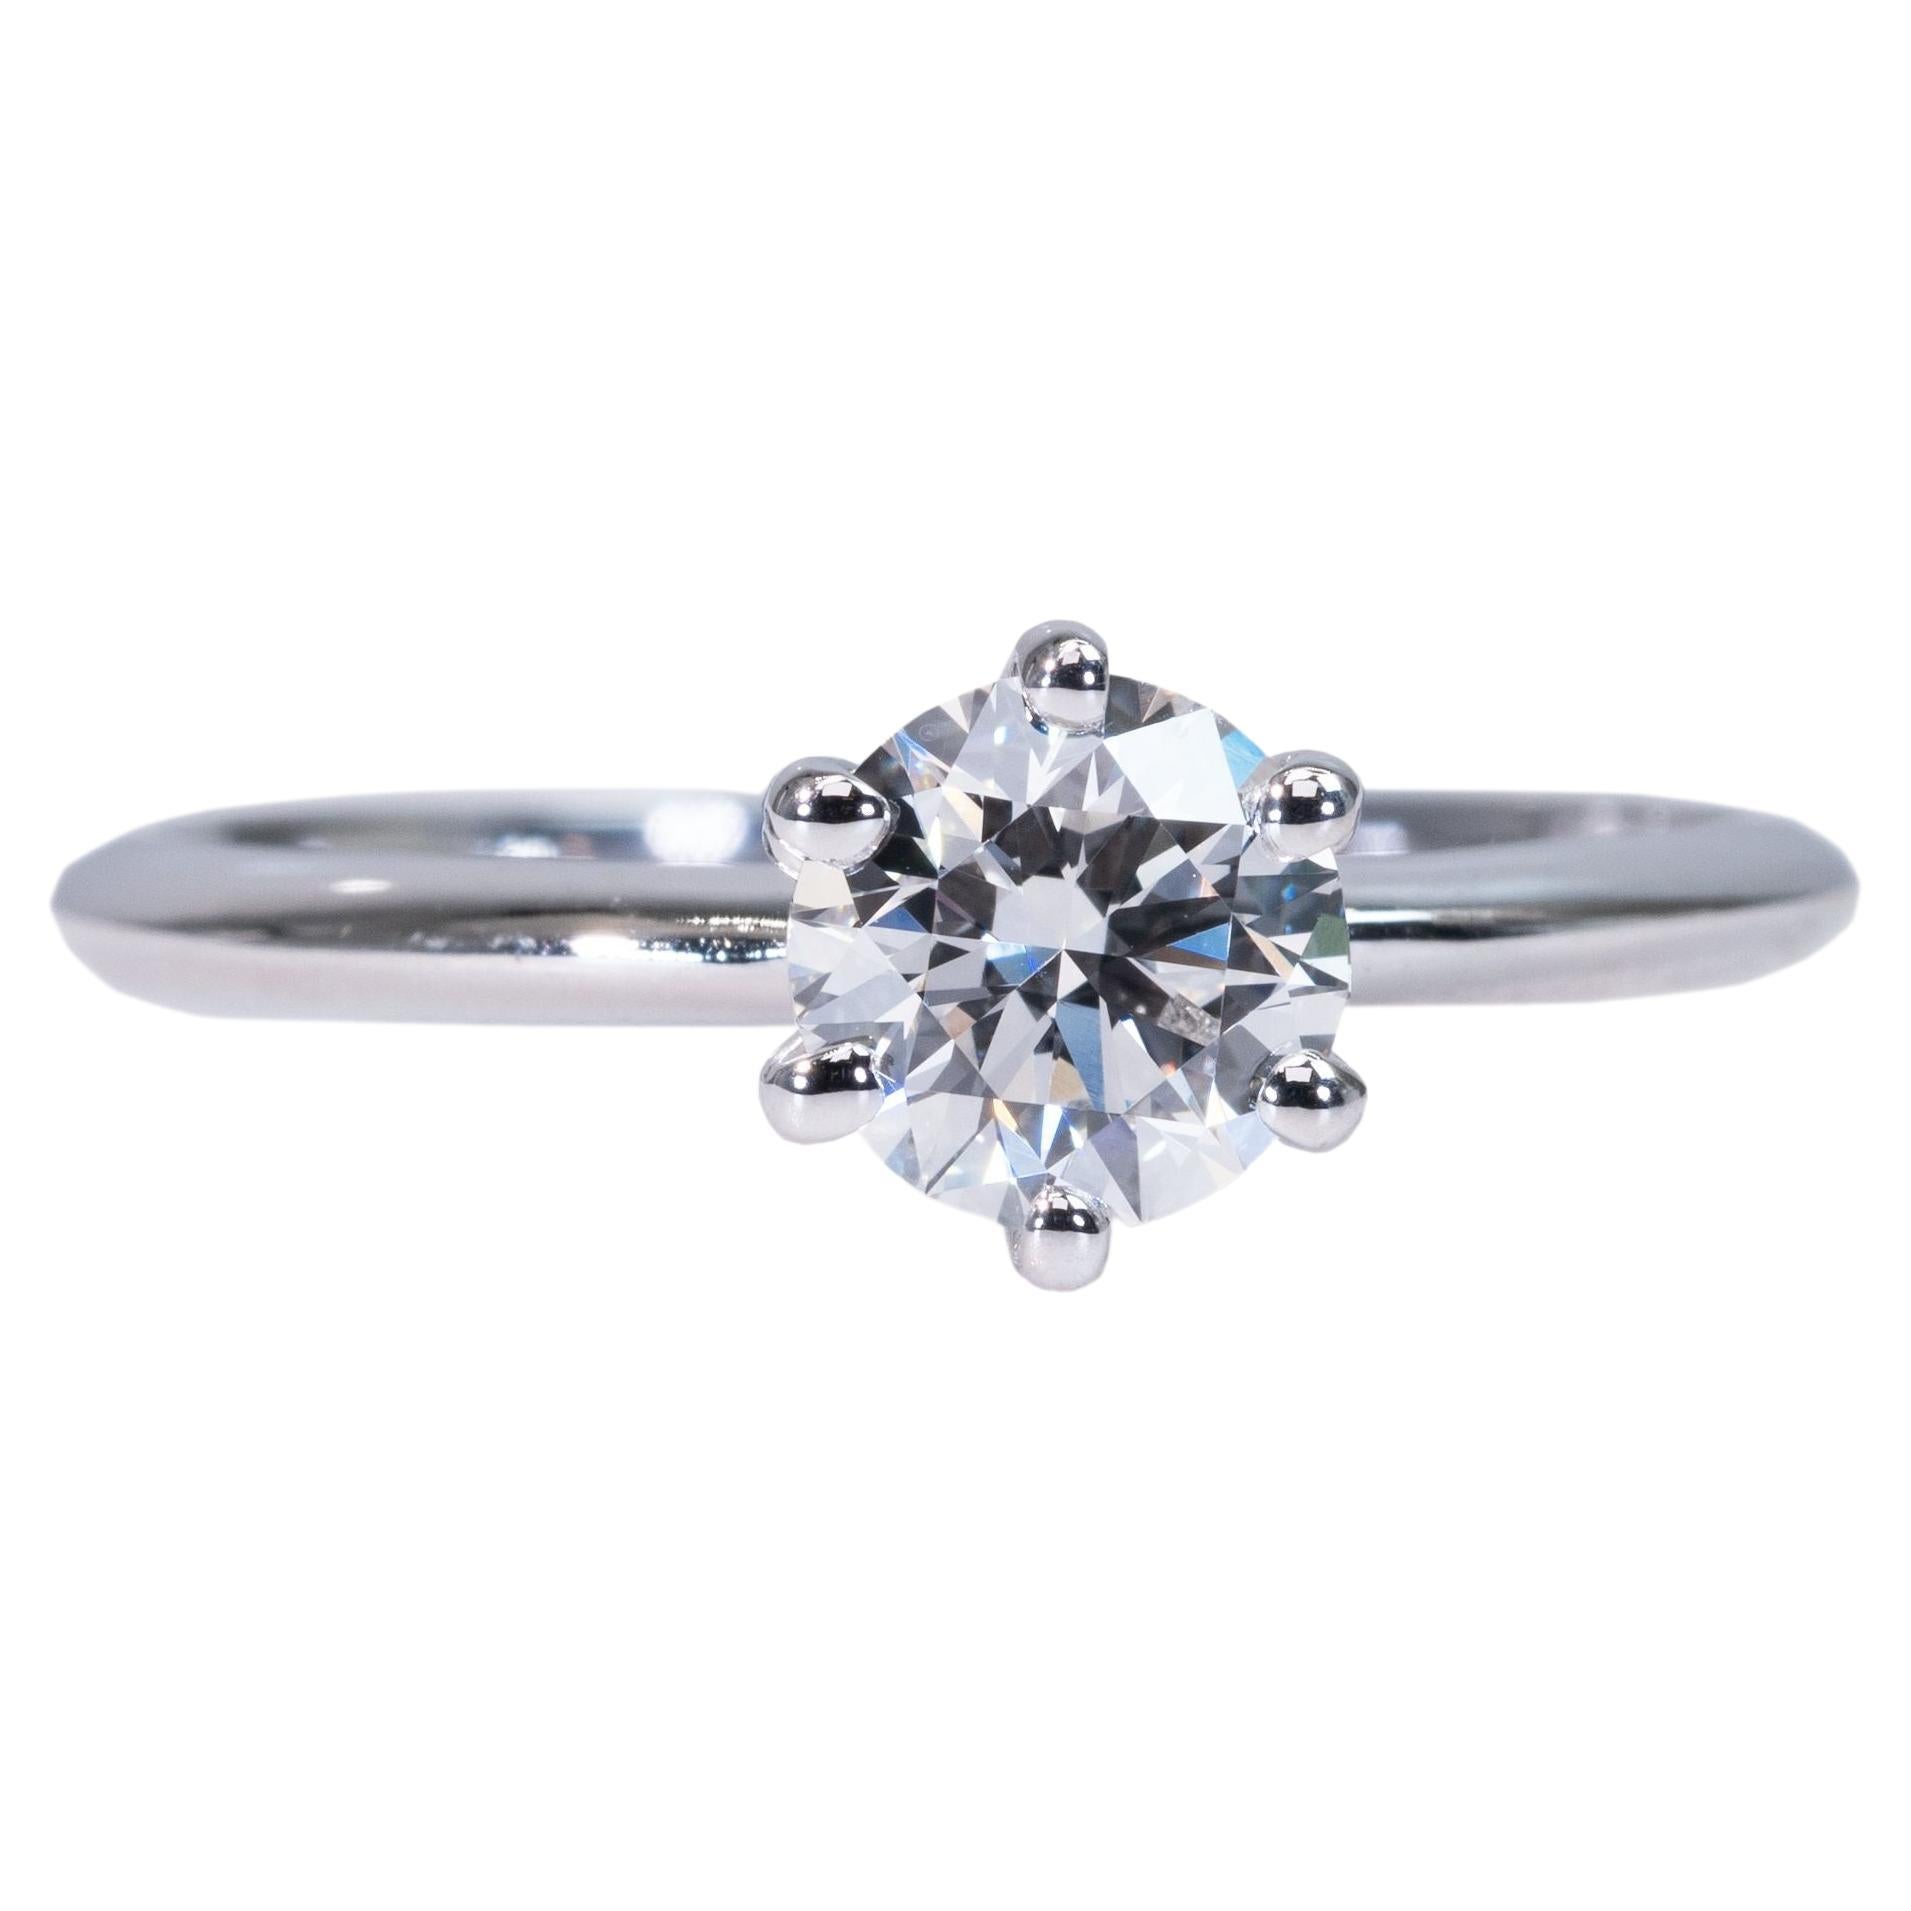 Marvelous 18k White Gold Engagement Ring w/ 1ct Natural Diamonds IGI Certificate For Sale